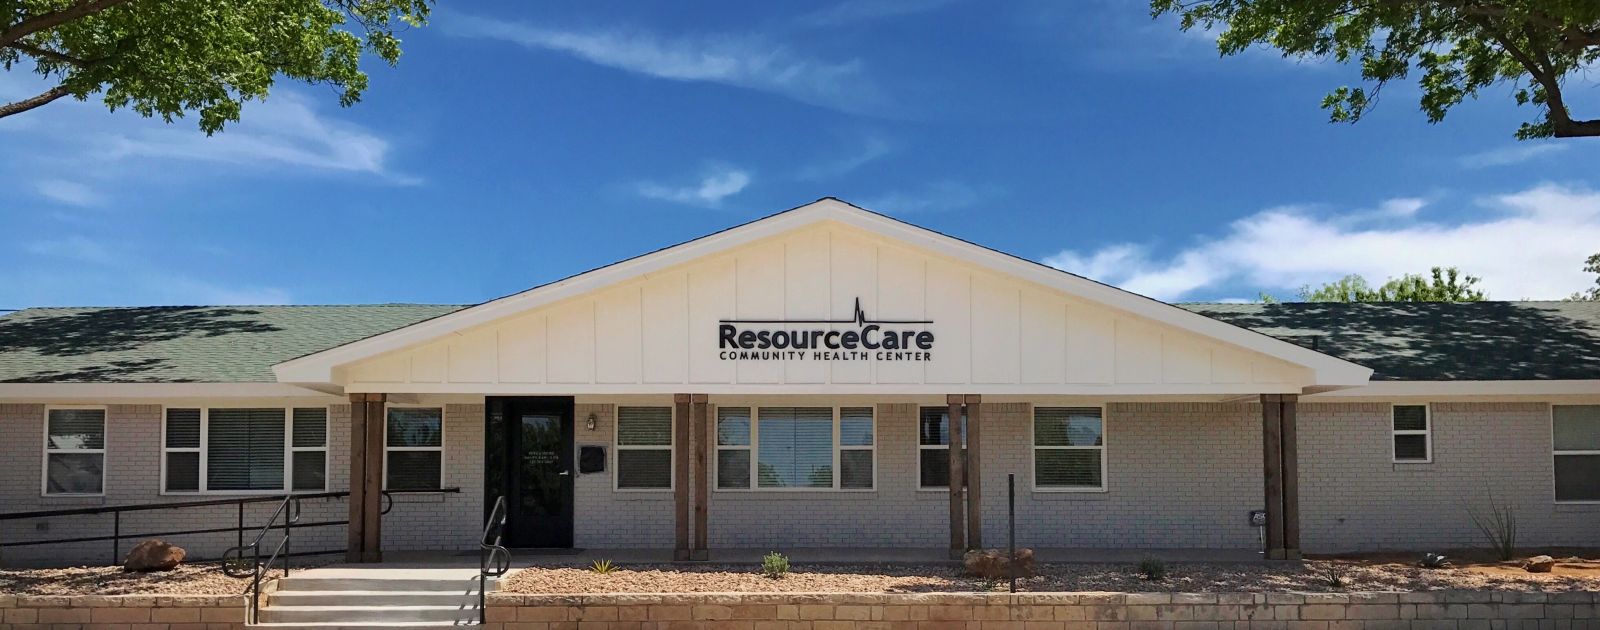 ResourceCare Community Health Center - Healthy Texas Women 